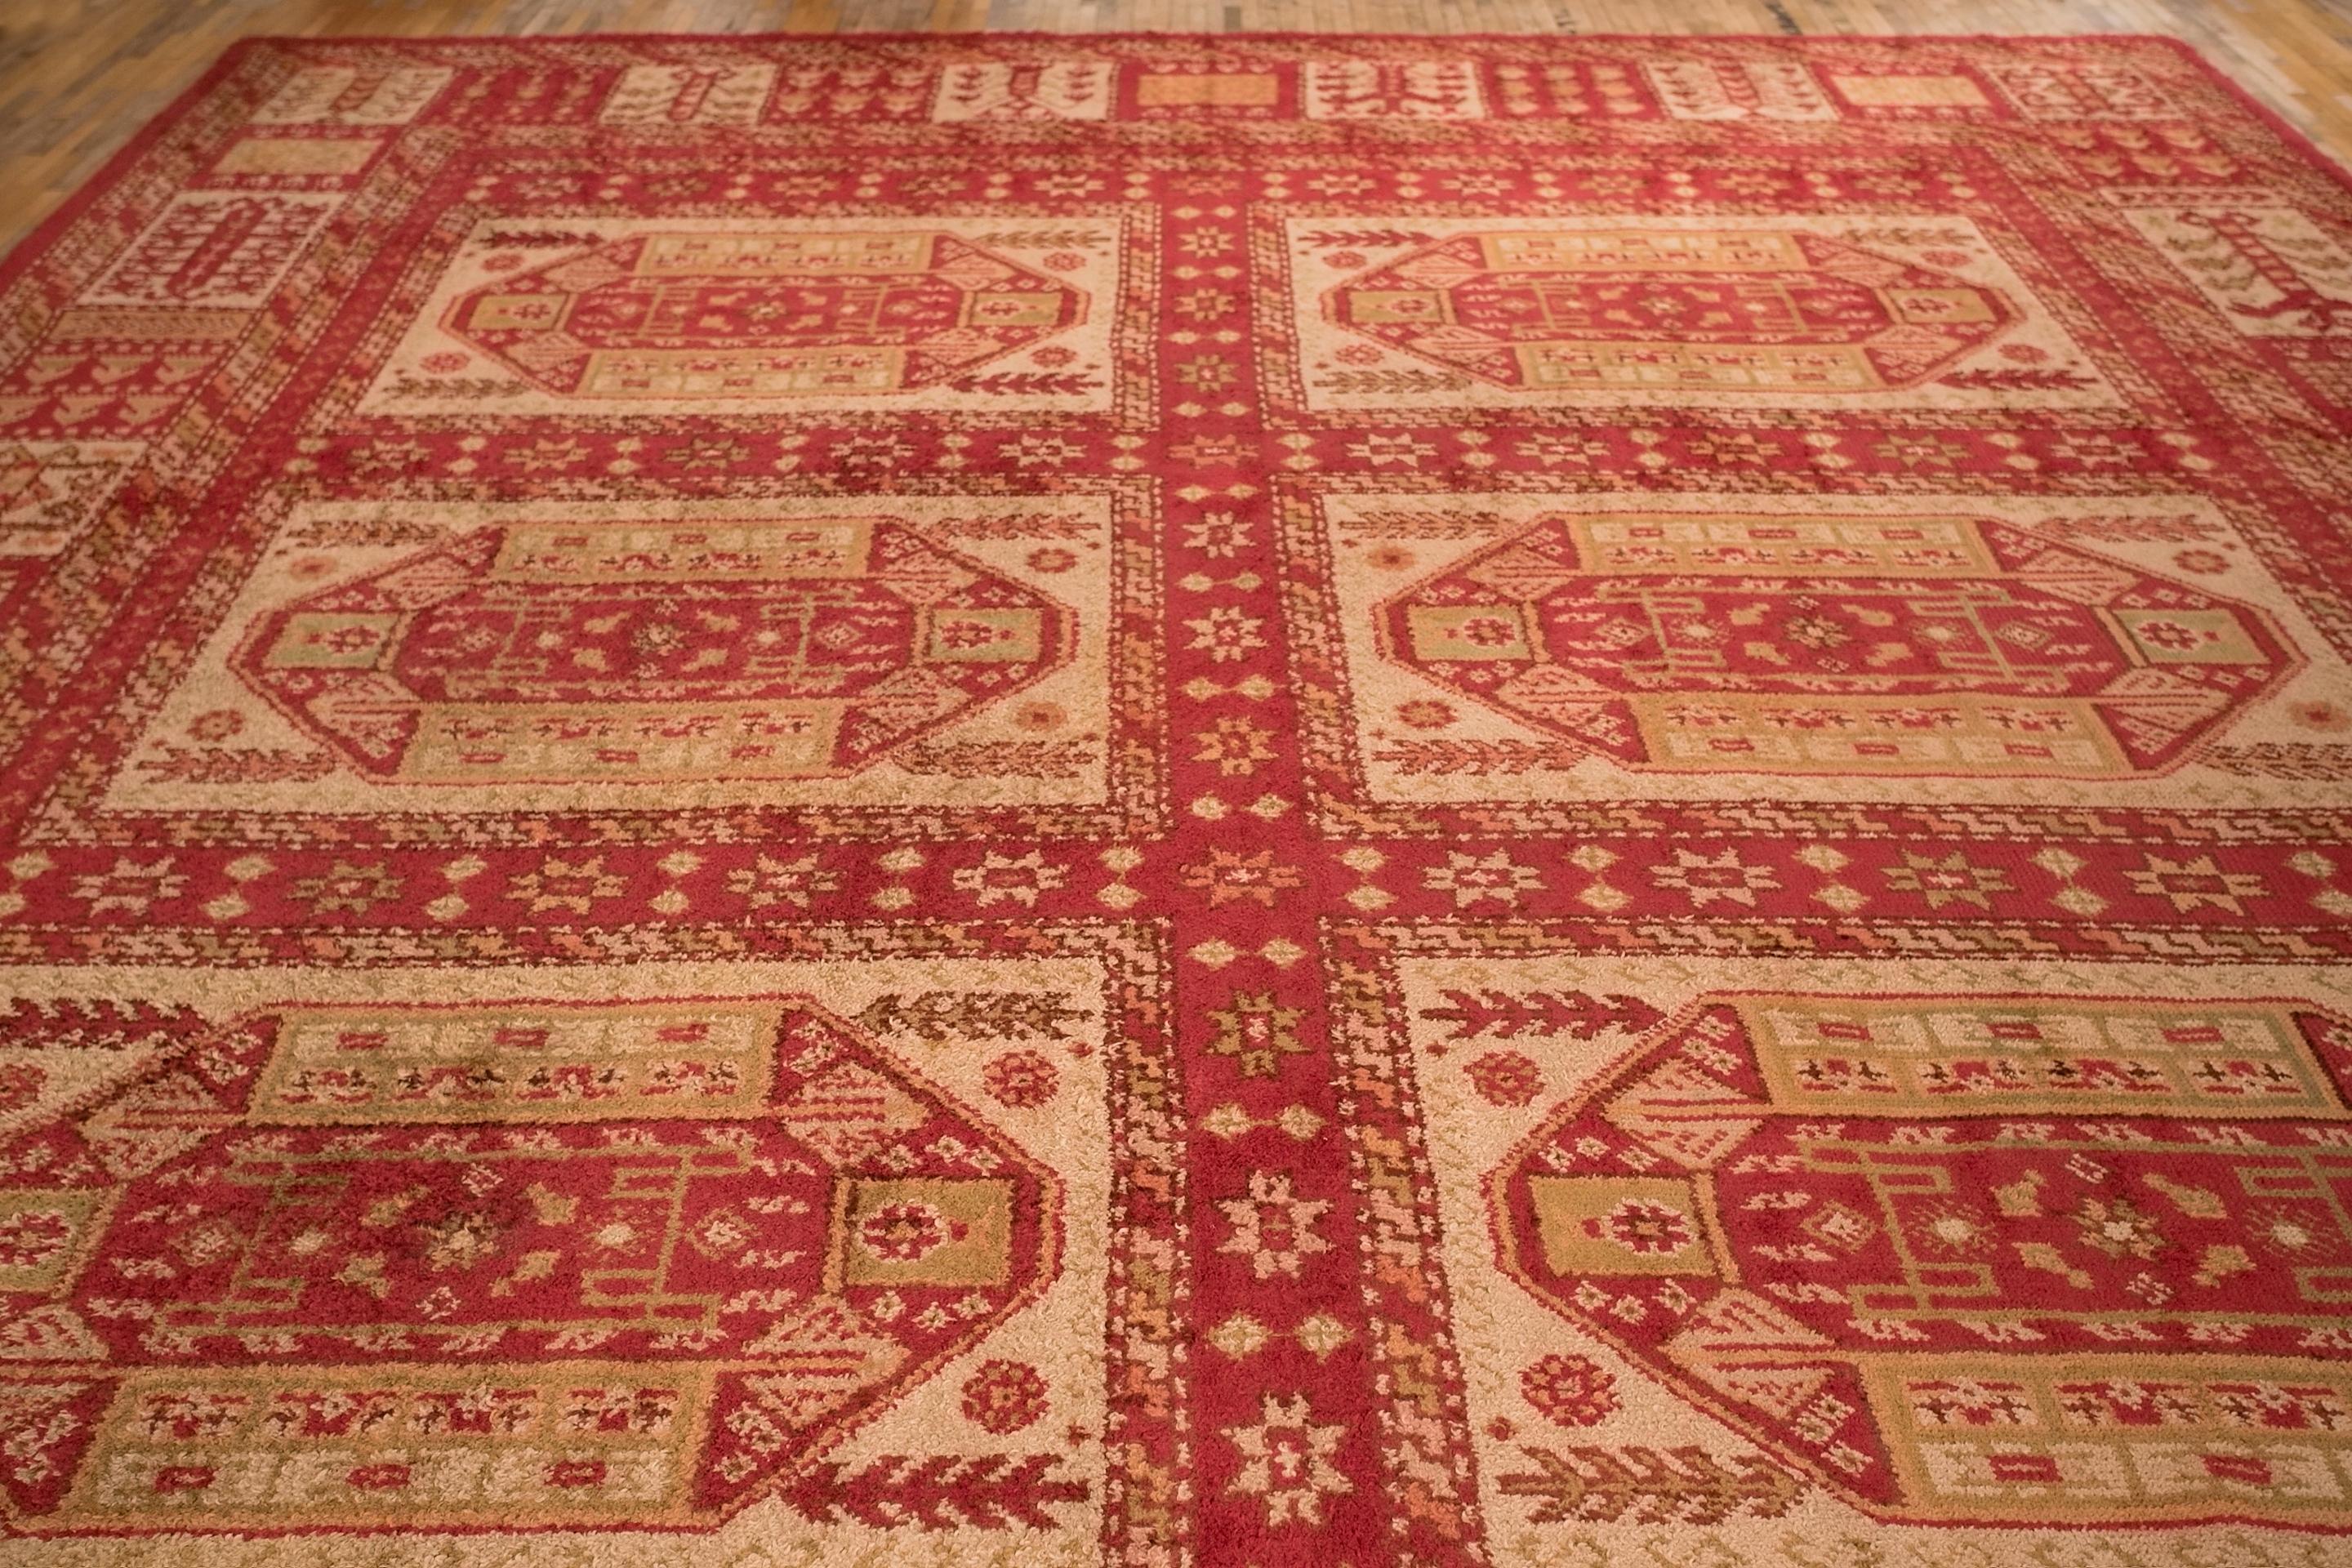 Antique Palace Turkish Ushak Carpet 555 X 375 cm For Sale 1